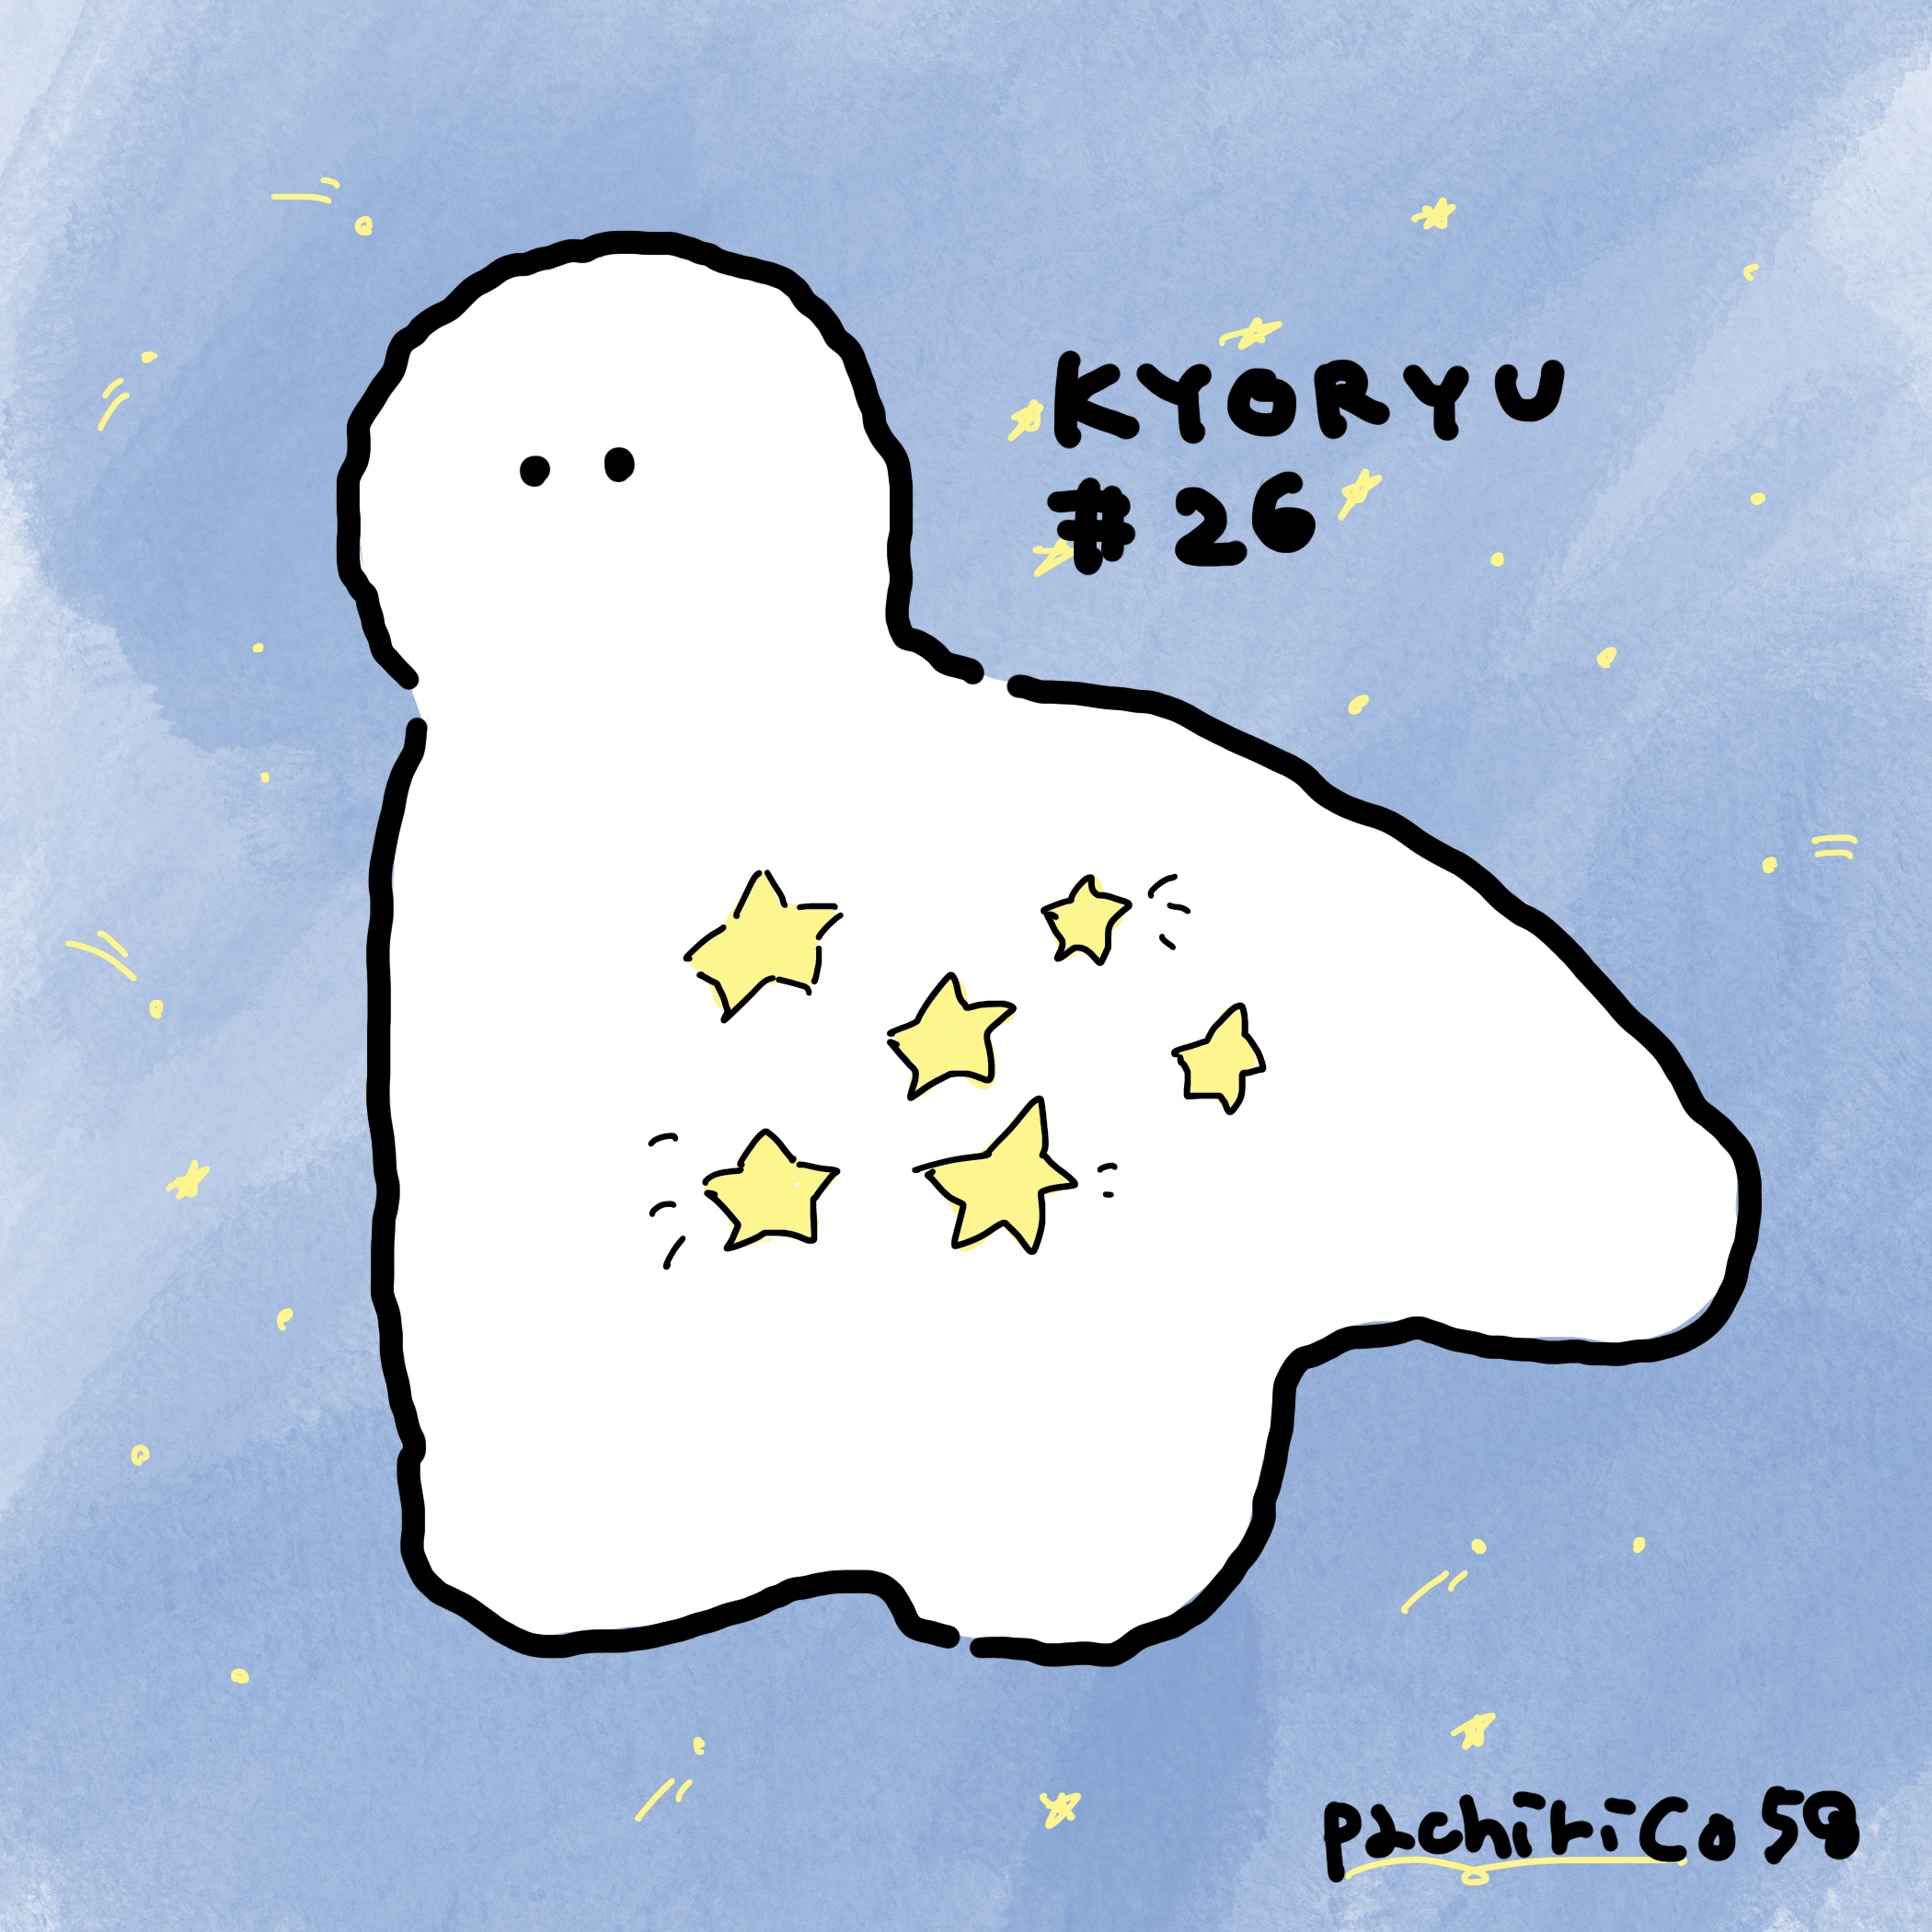 KYORYU#0026